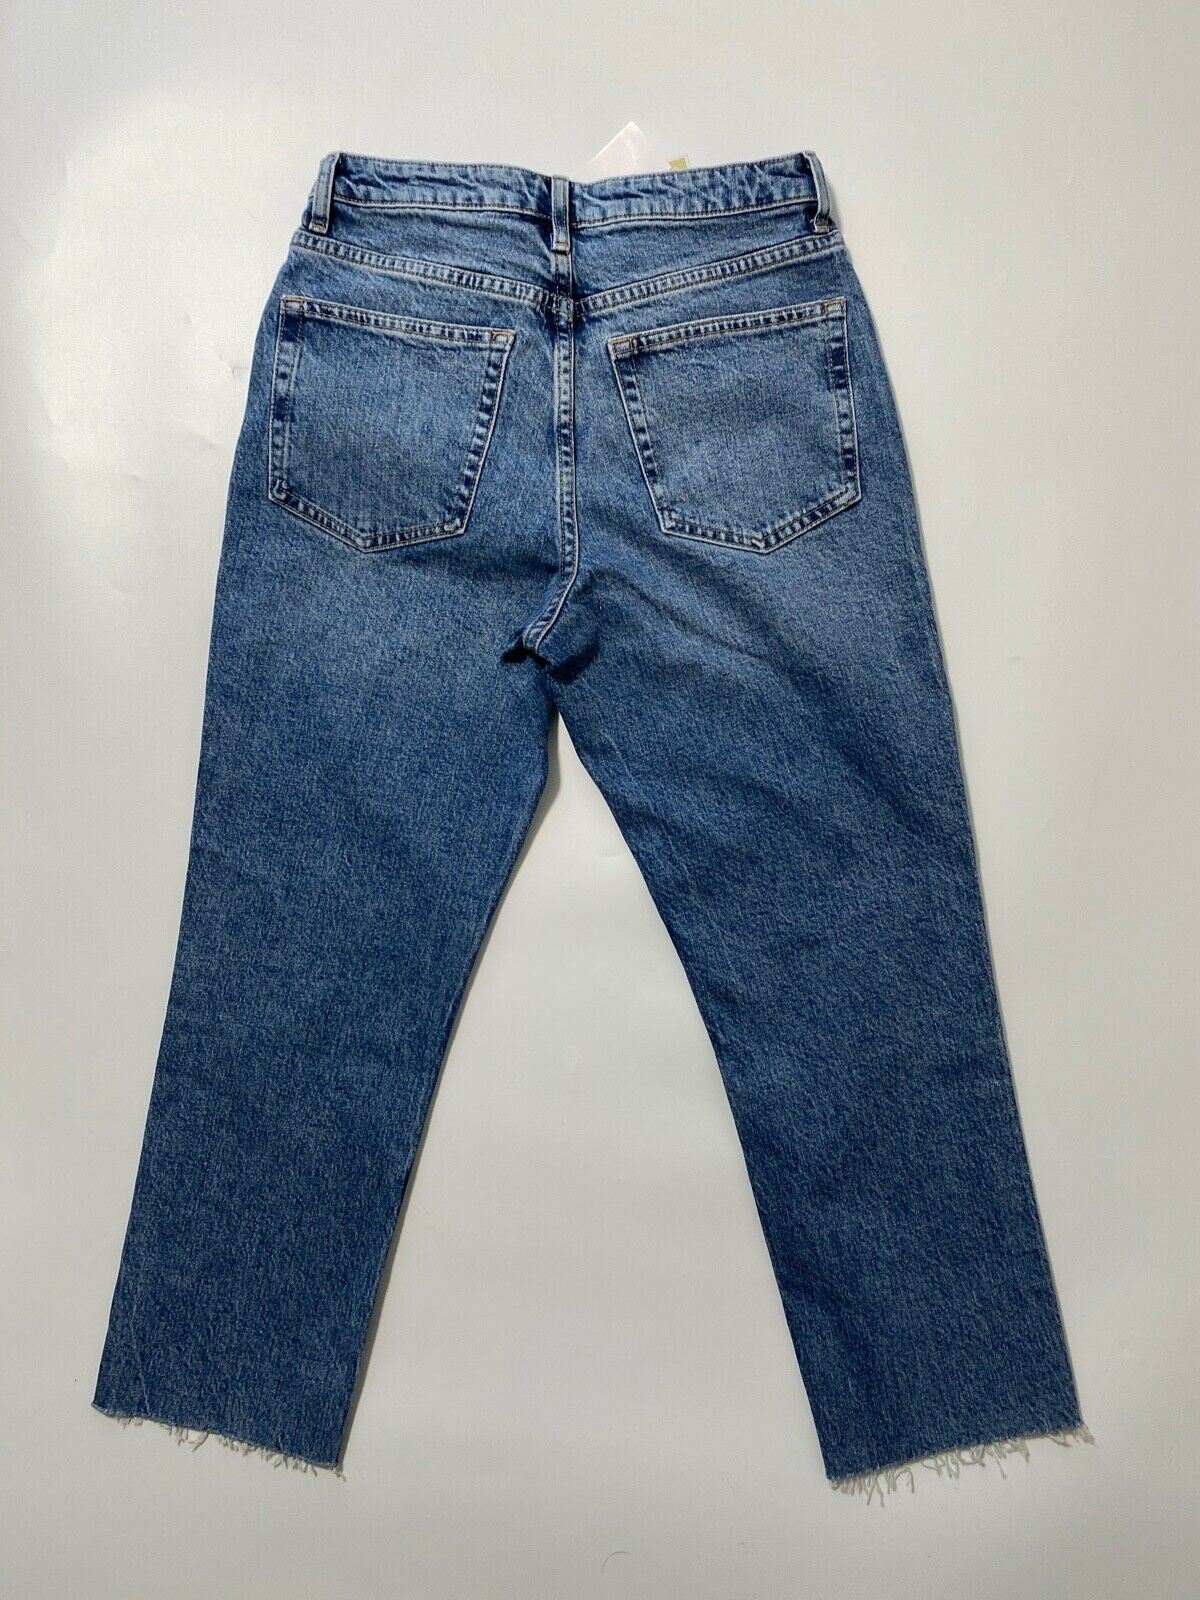 Very Mid Wash Blue High Waist Crop Jeans   Size 10 Short, 6 Regular